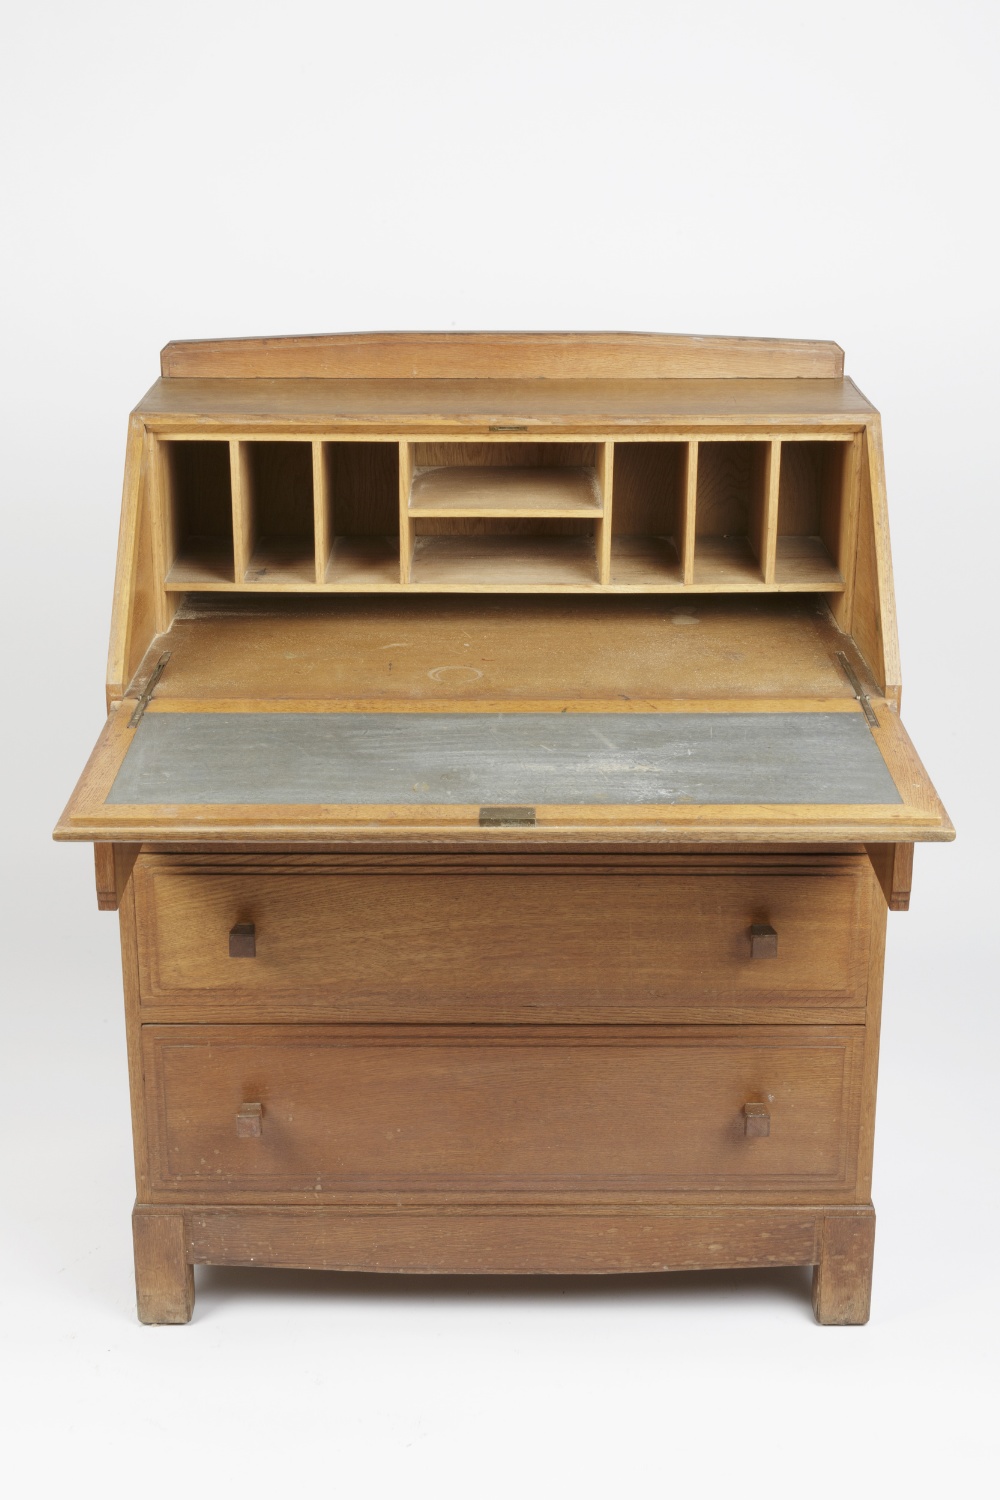 Attributed to Brynmawr bureau, oak, three short and two long drawers 84cm x 107cm x 48cm - Image 3 of 6